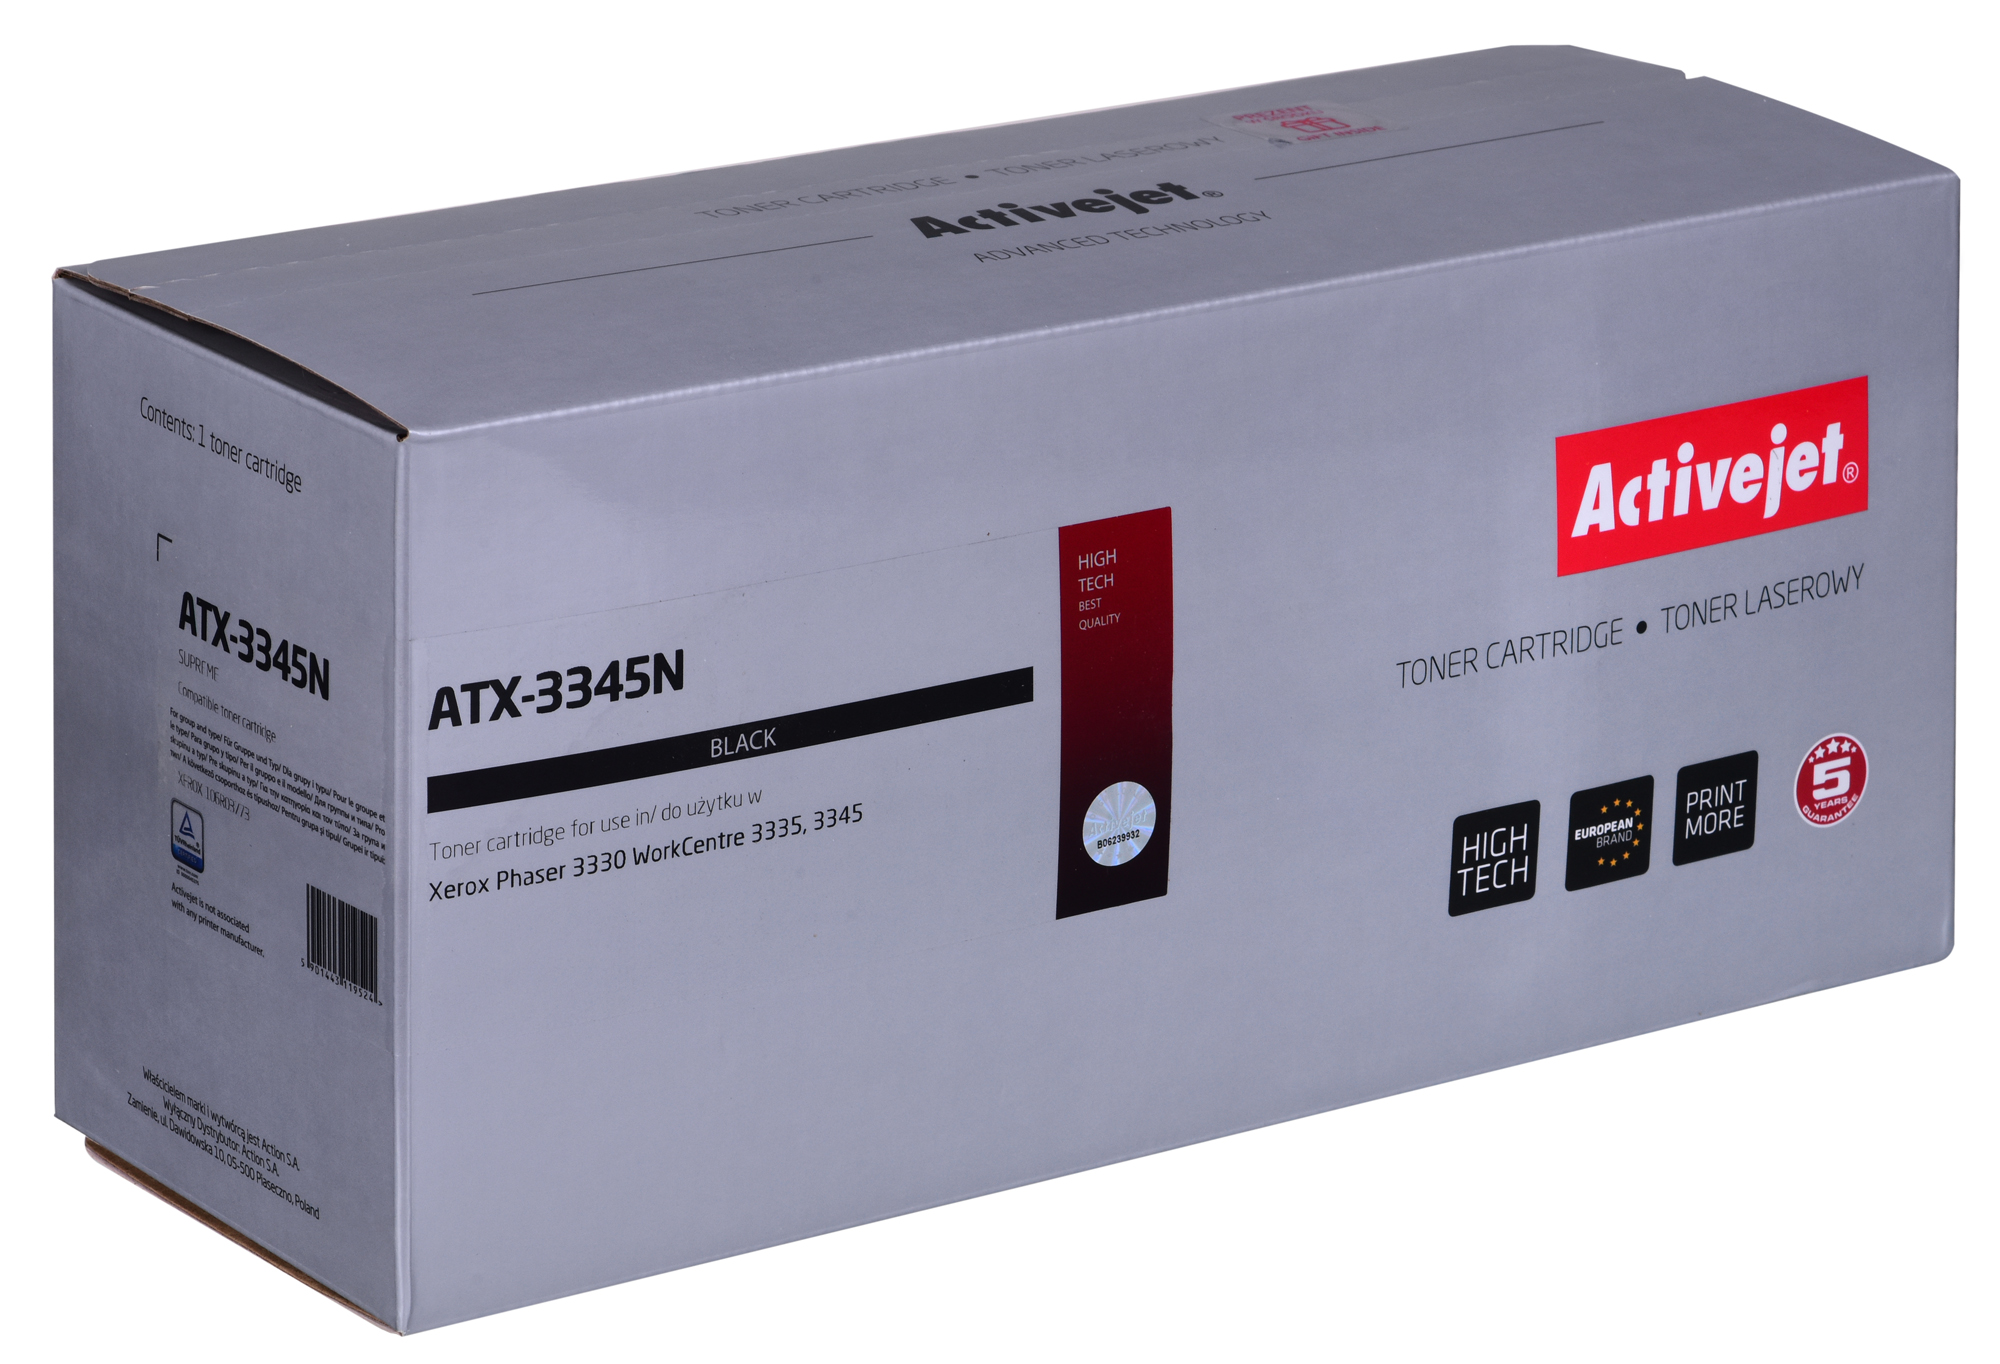 Toner Activejet ATX-3345N do drukarki Xerox, zamiennik XEROX 106R03773; Supreme; 3000 stron; czarny.